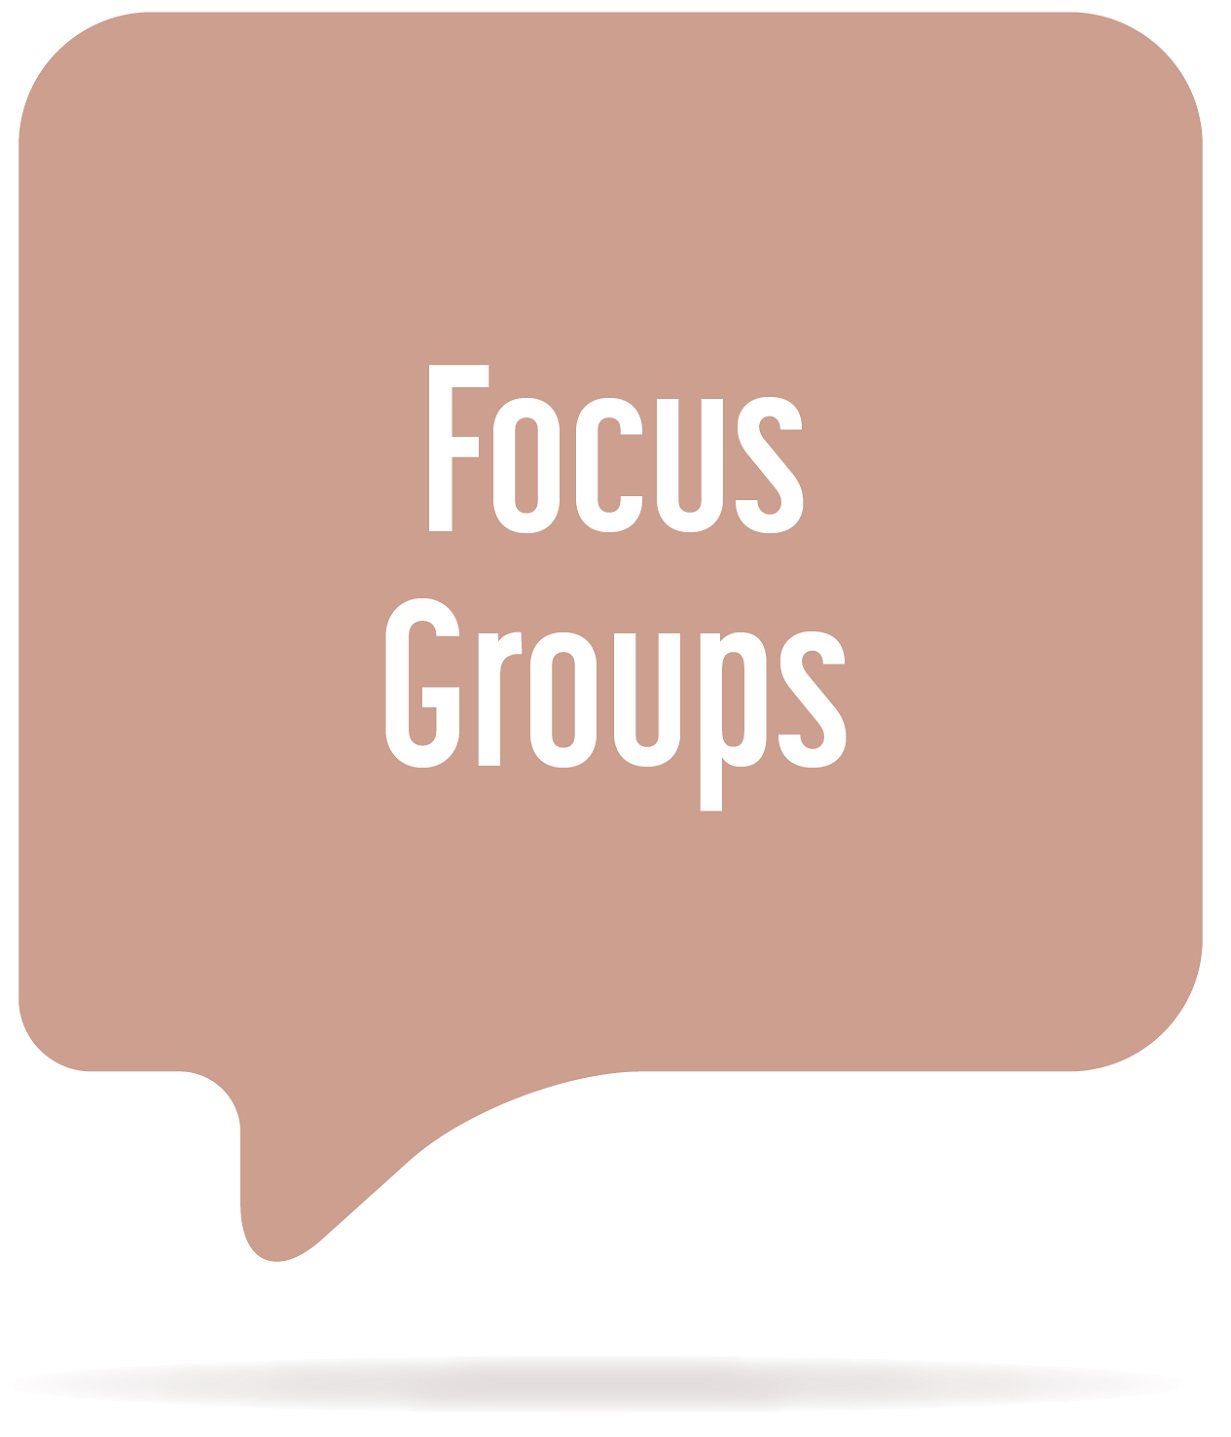 'Focus Groups' written in a peach-coloured speech bubble